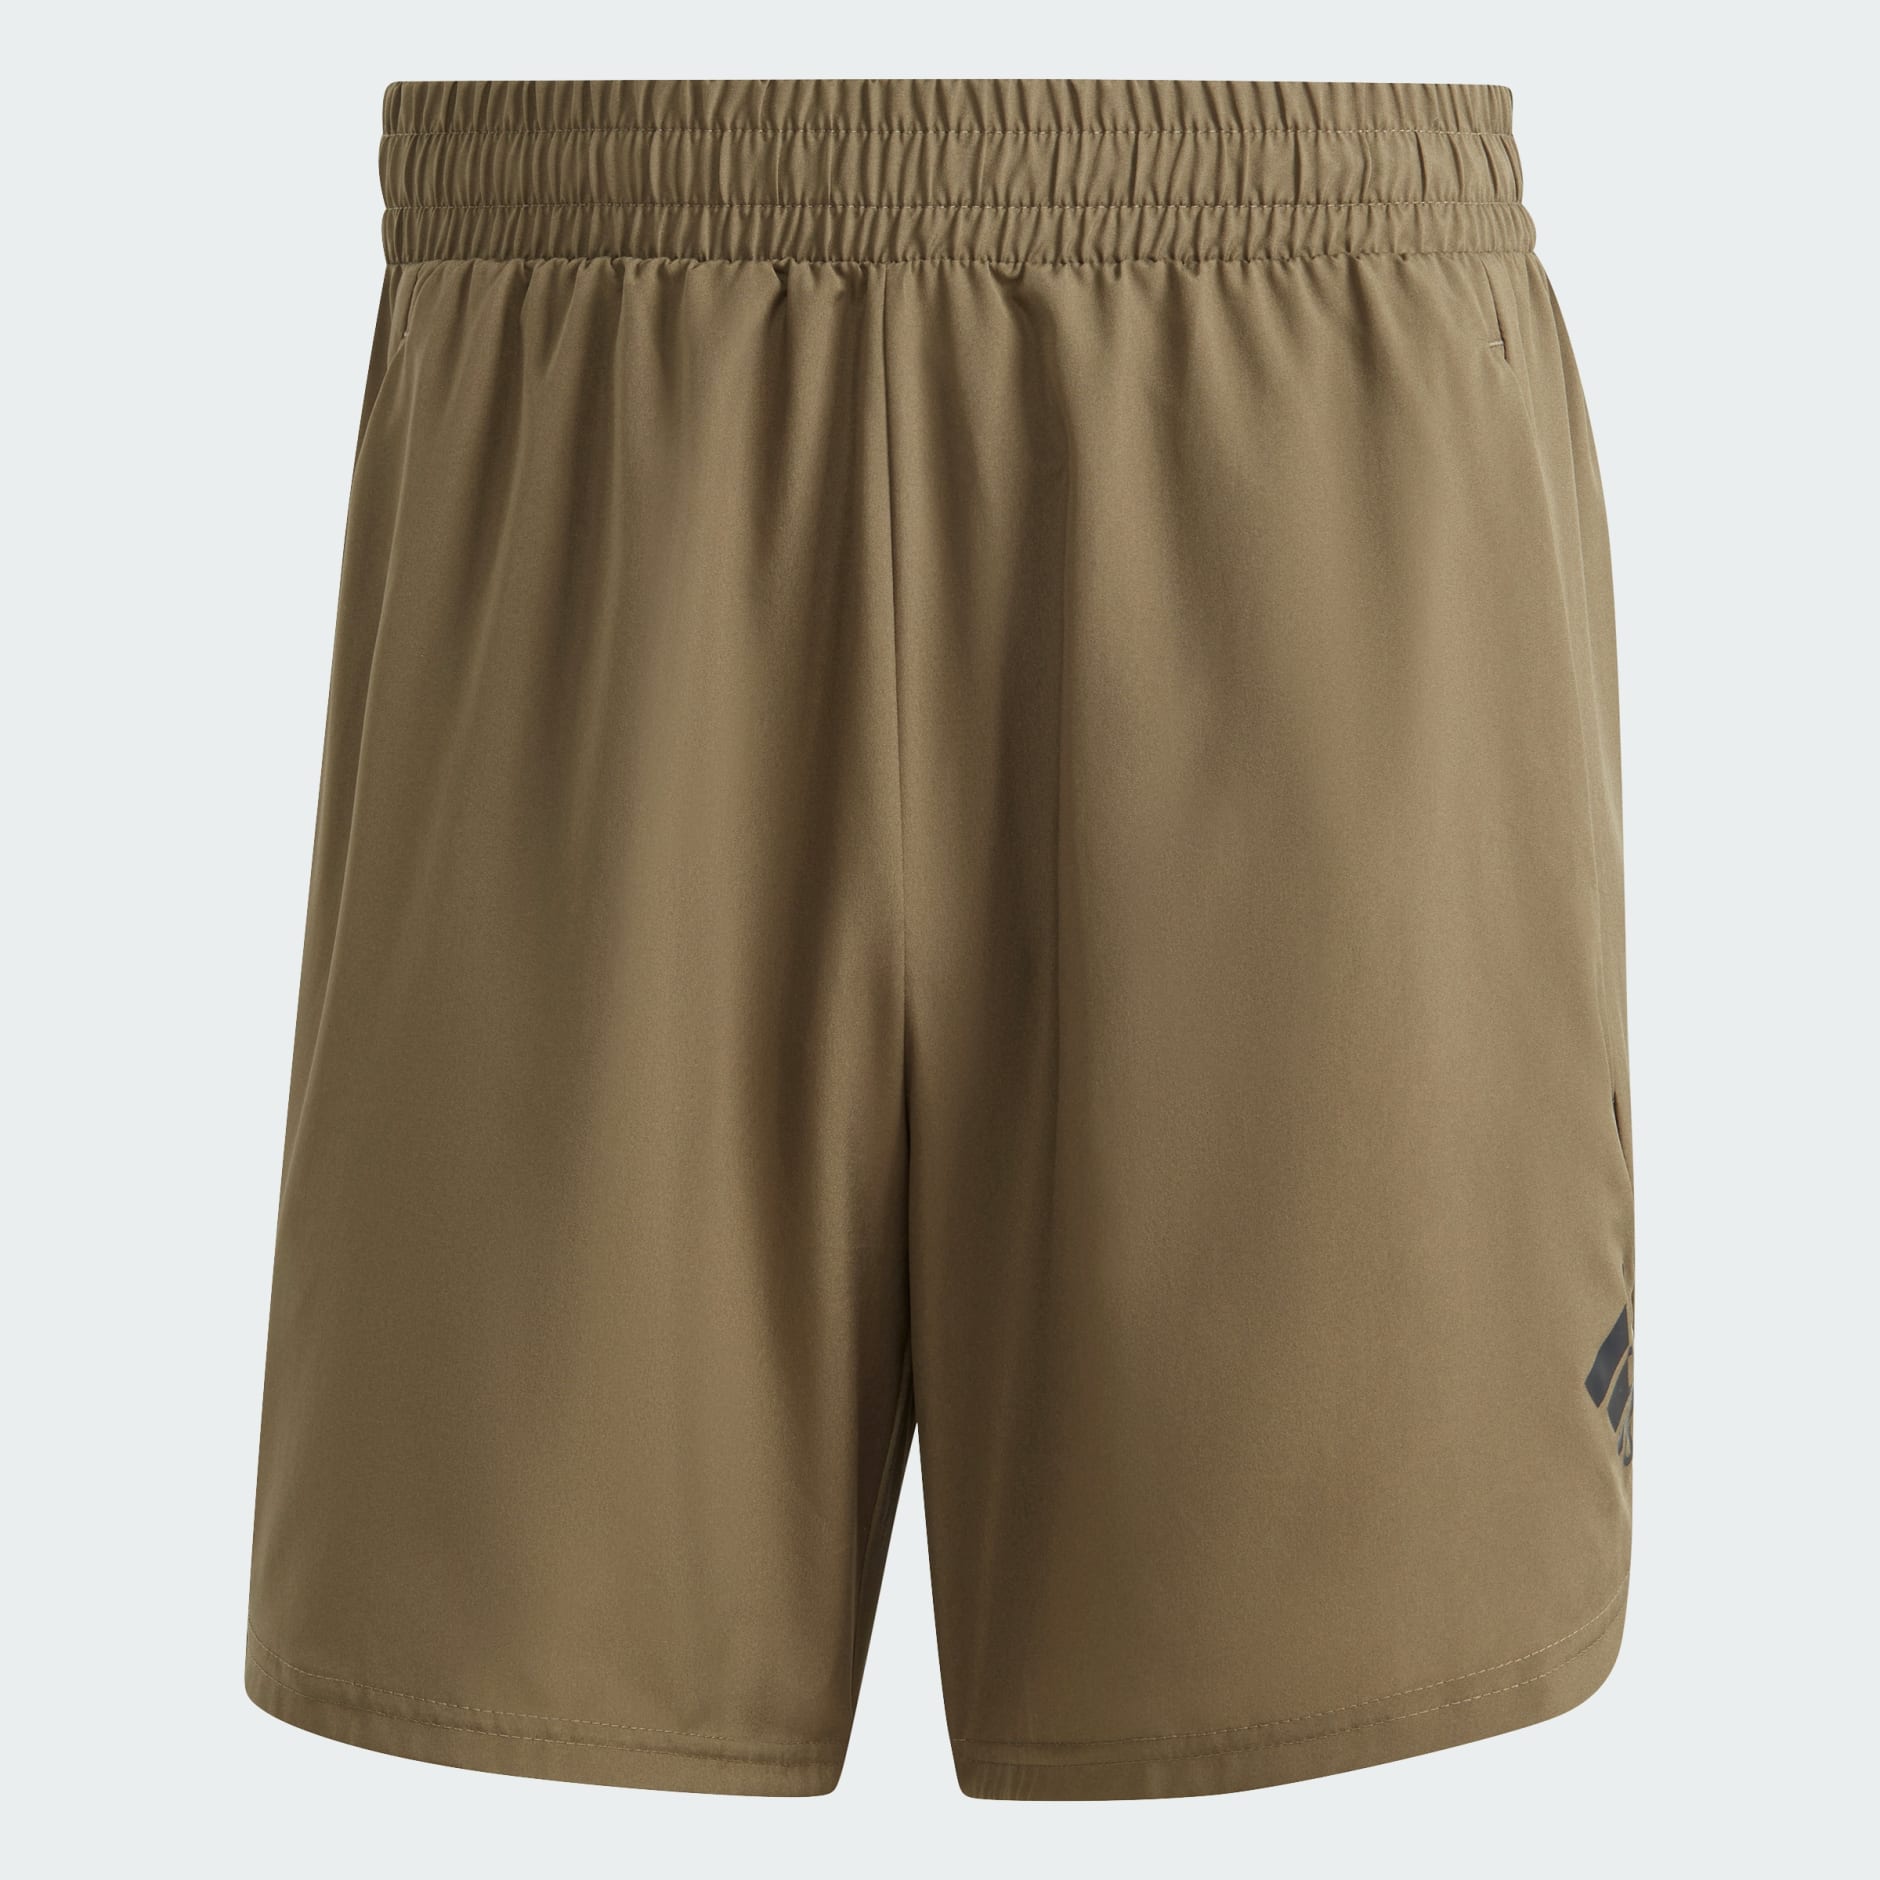 Men's Clothing - AEROREADY Designed for Movement Shorts - Green ...